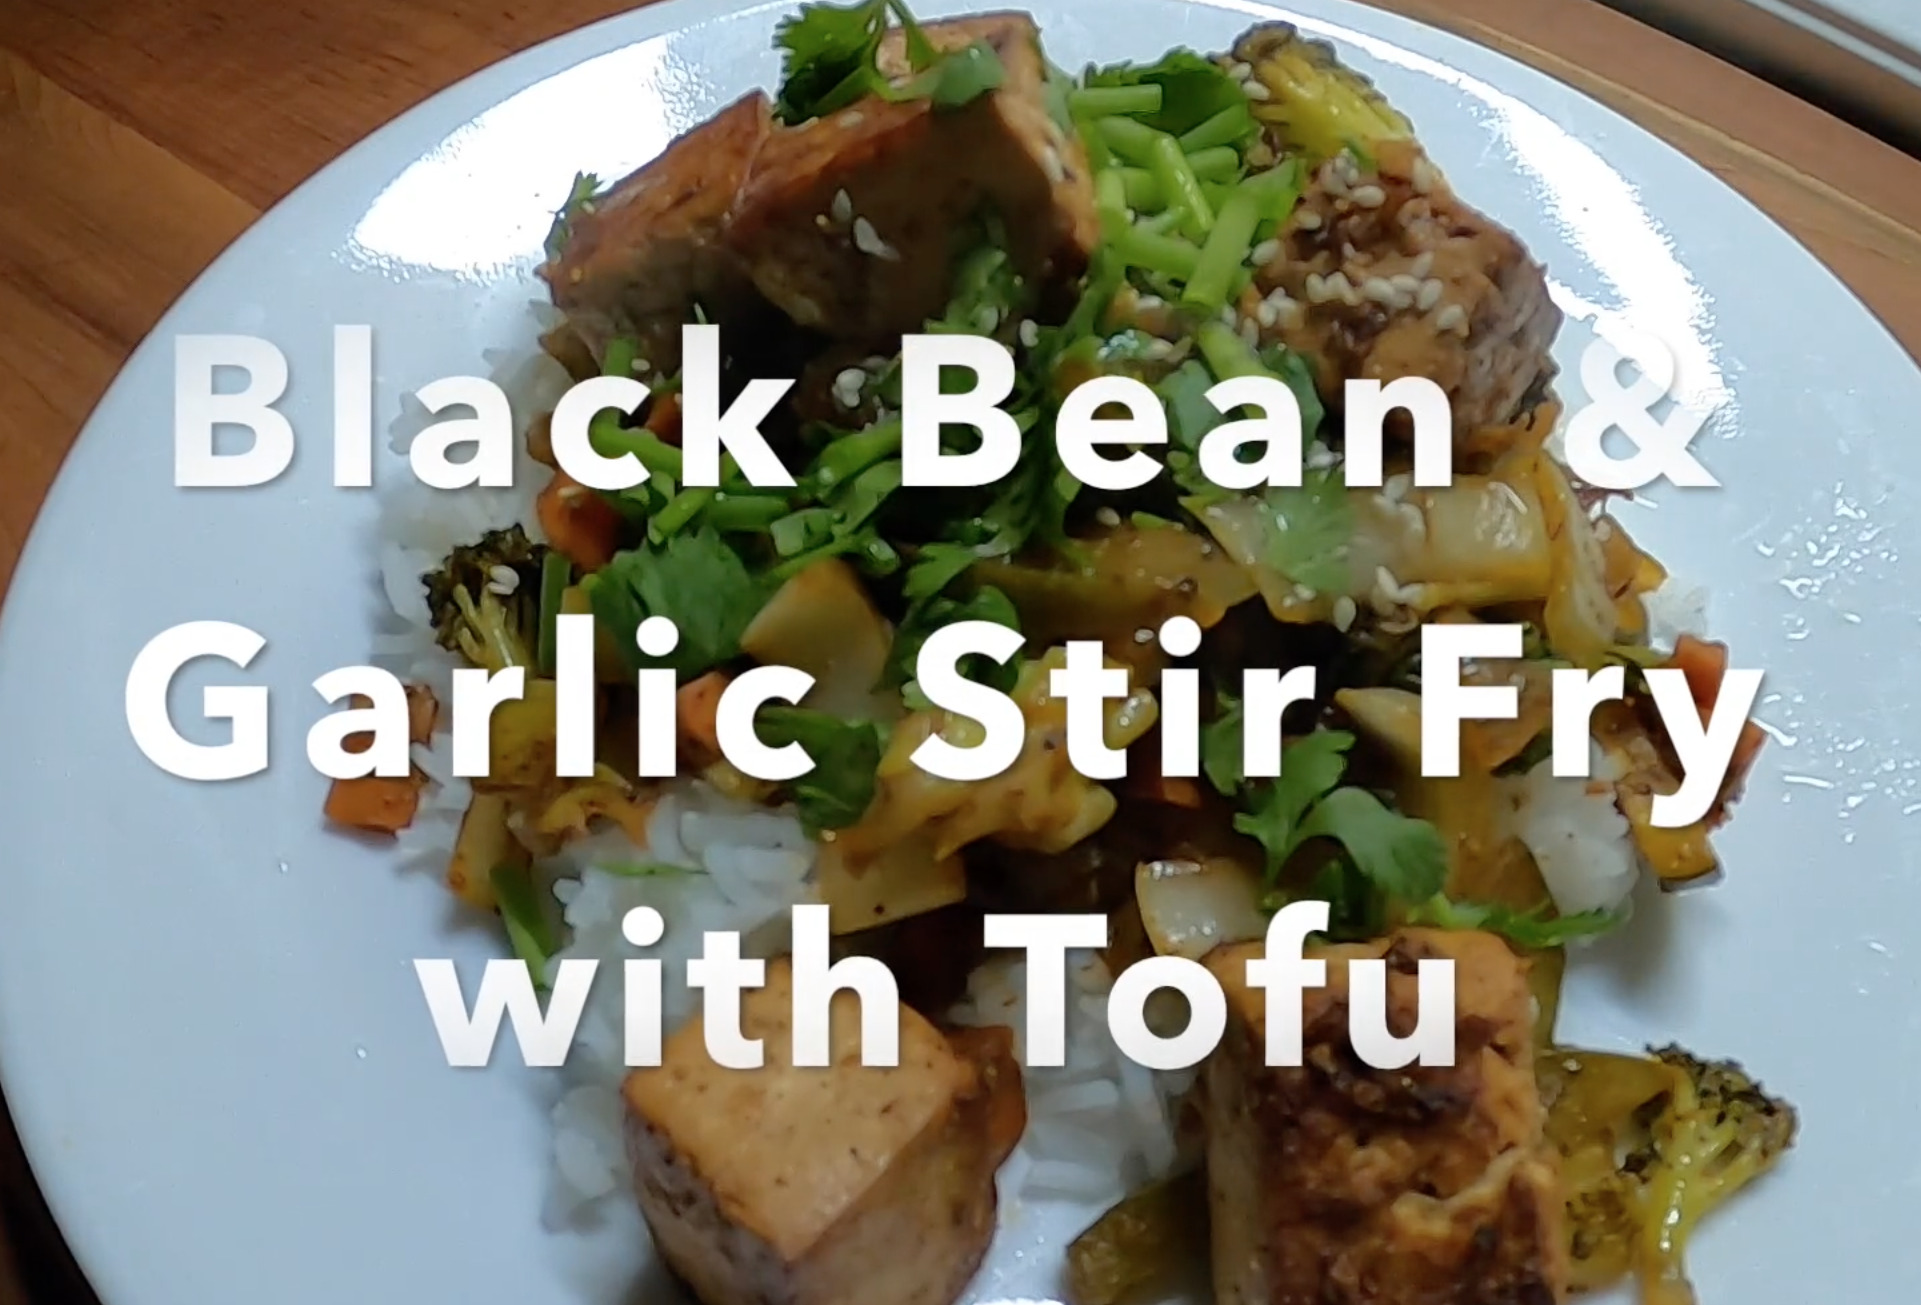 Black Bean & Garlic Stir Fry with Tofu